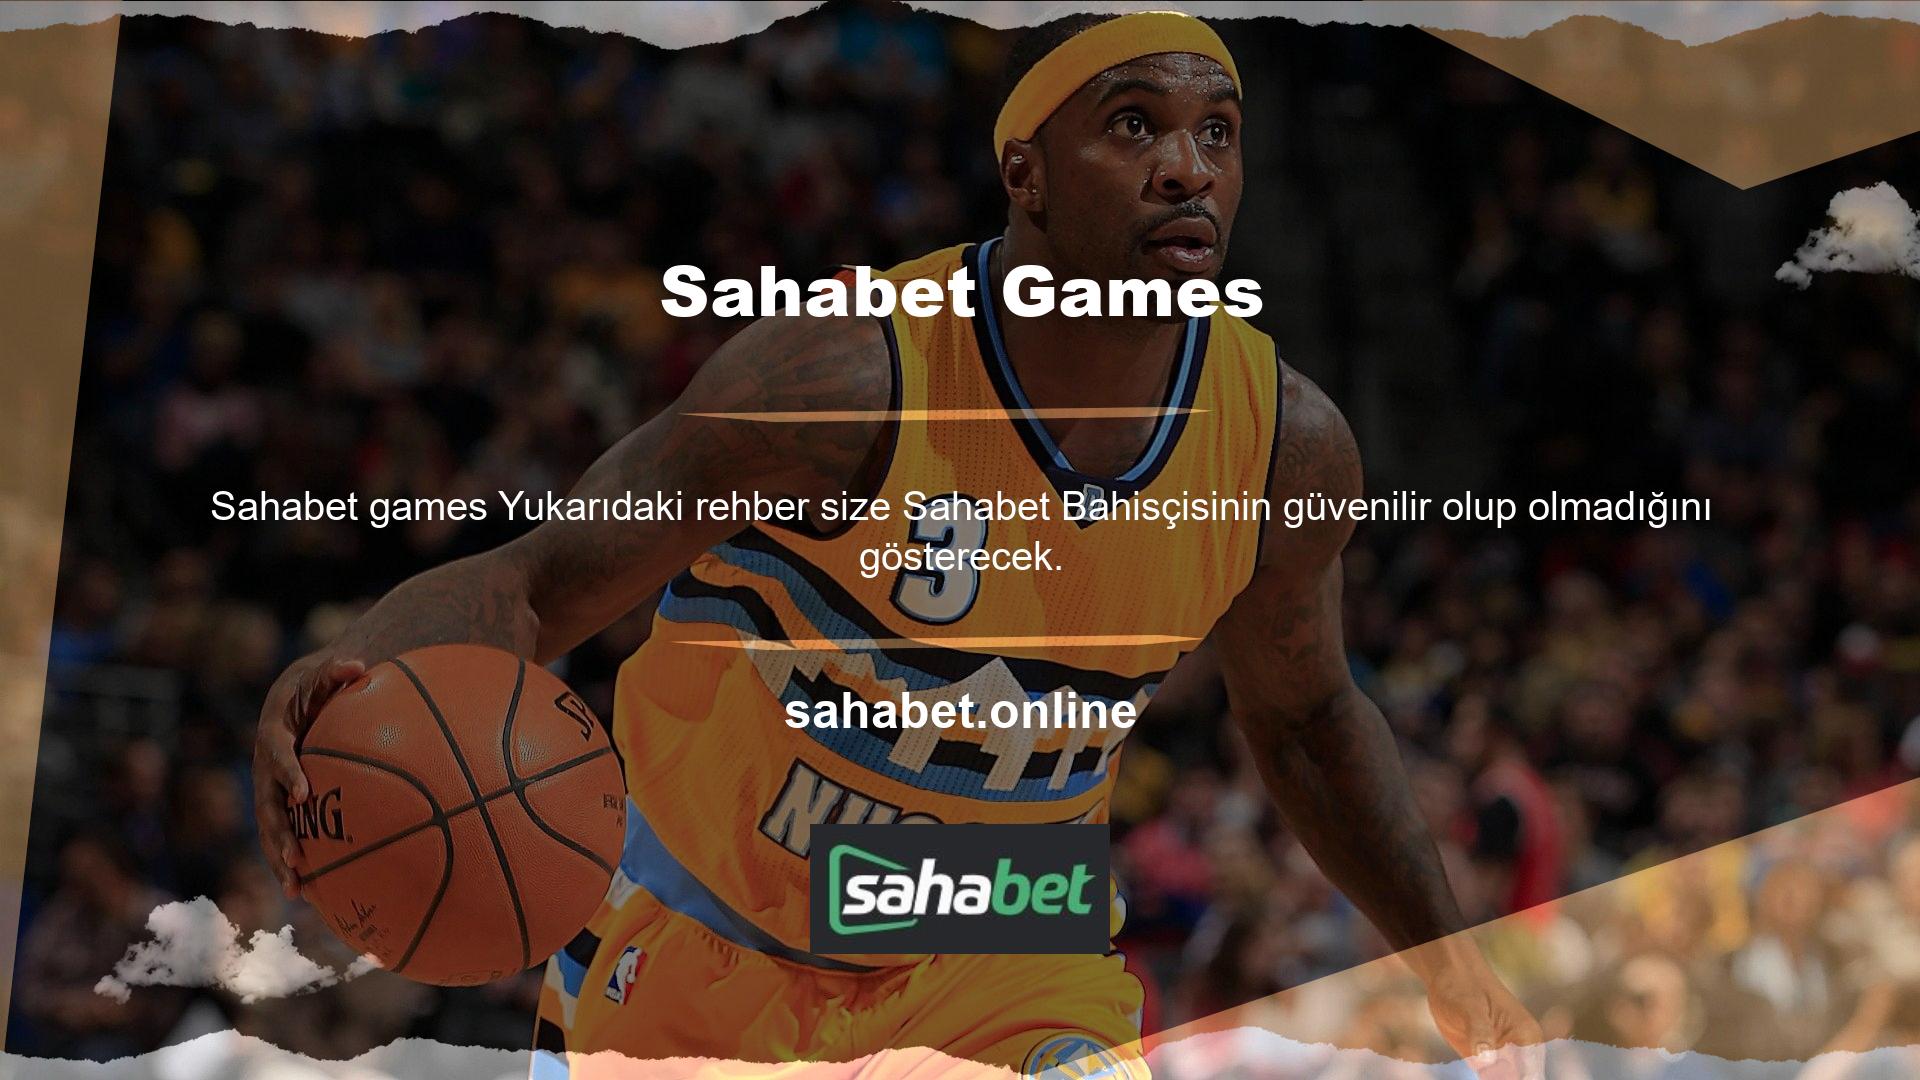 Sahabet games